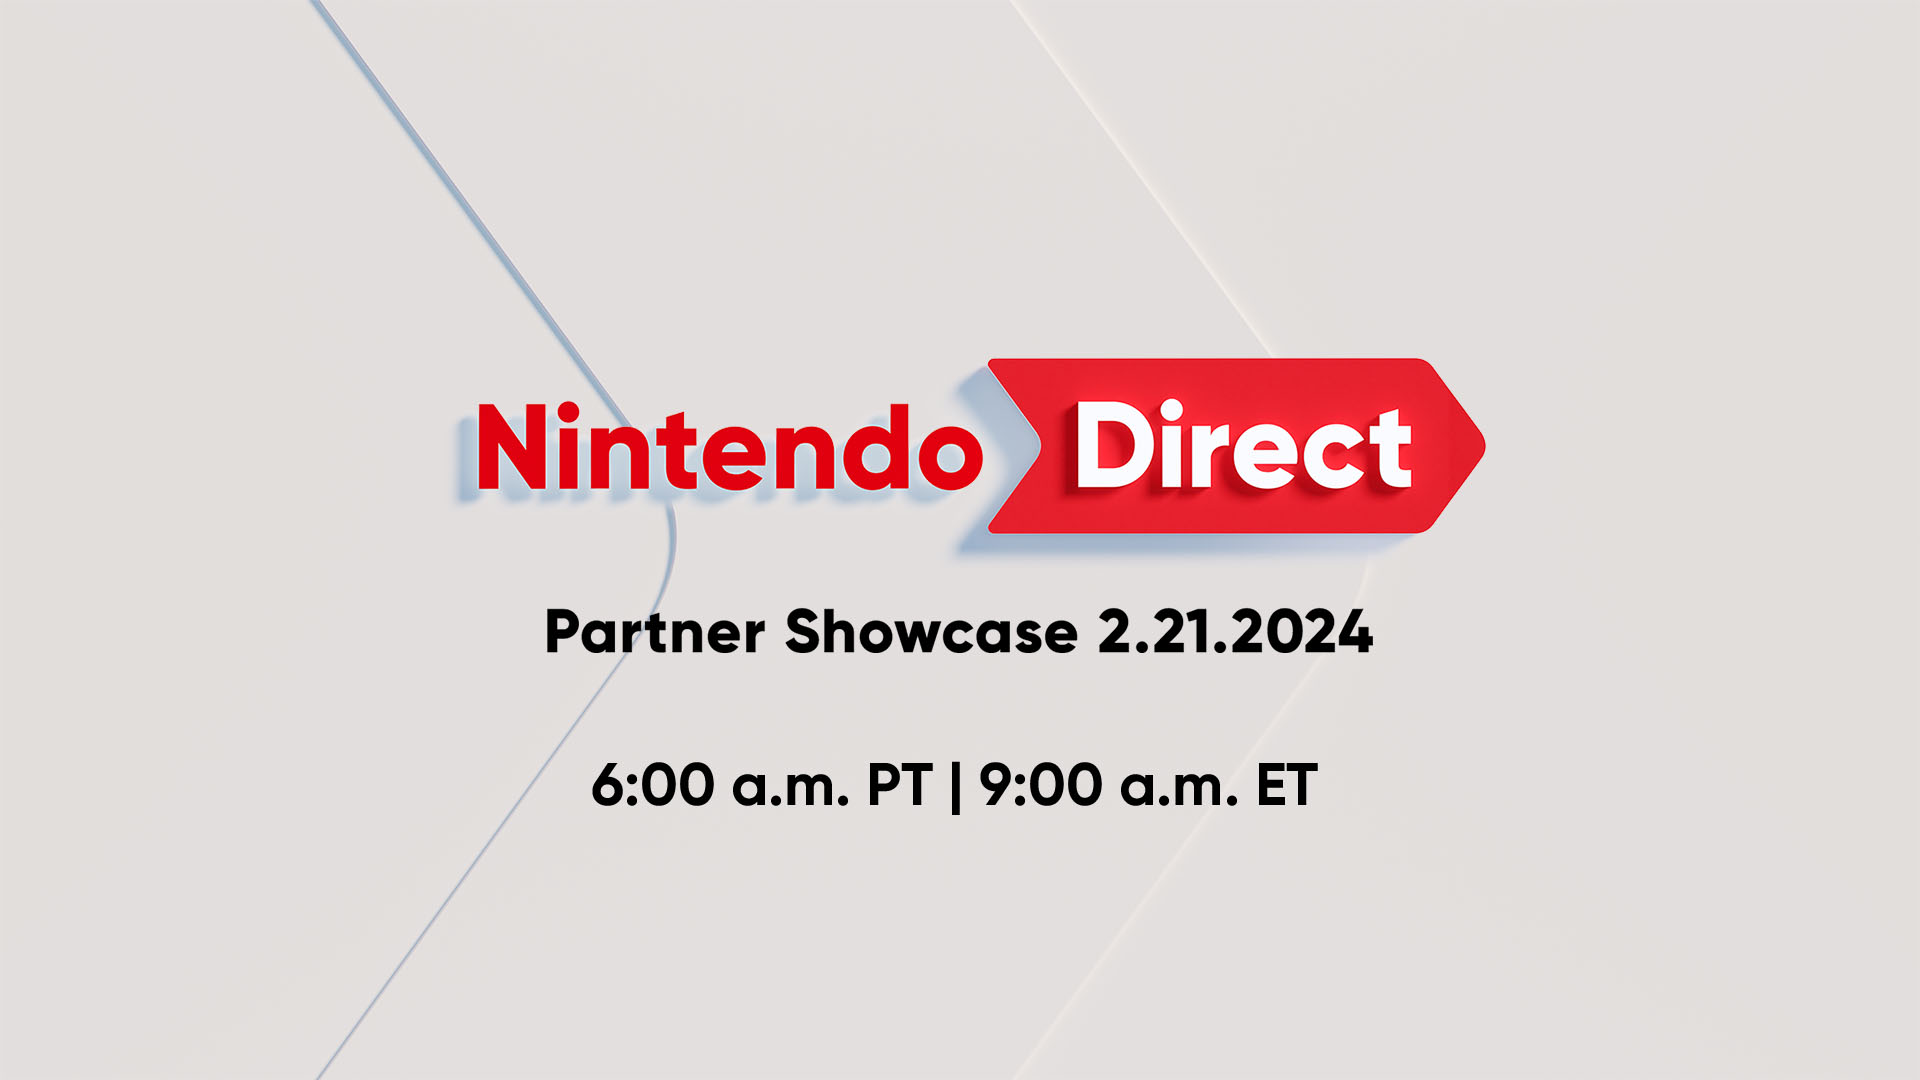 Nintendo Direct Partner 쇼케이스 시청 방법 및 기대 사항 해보자